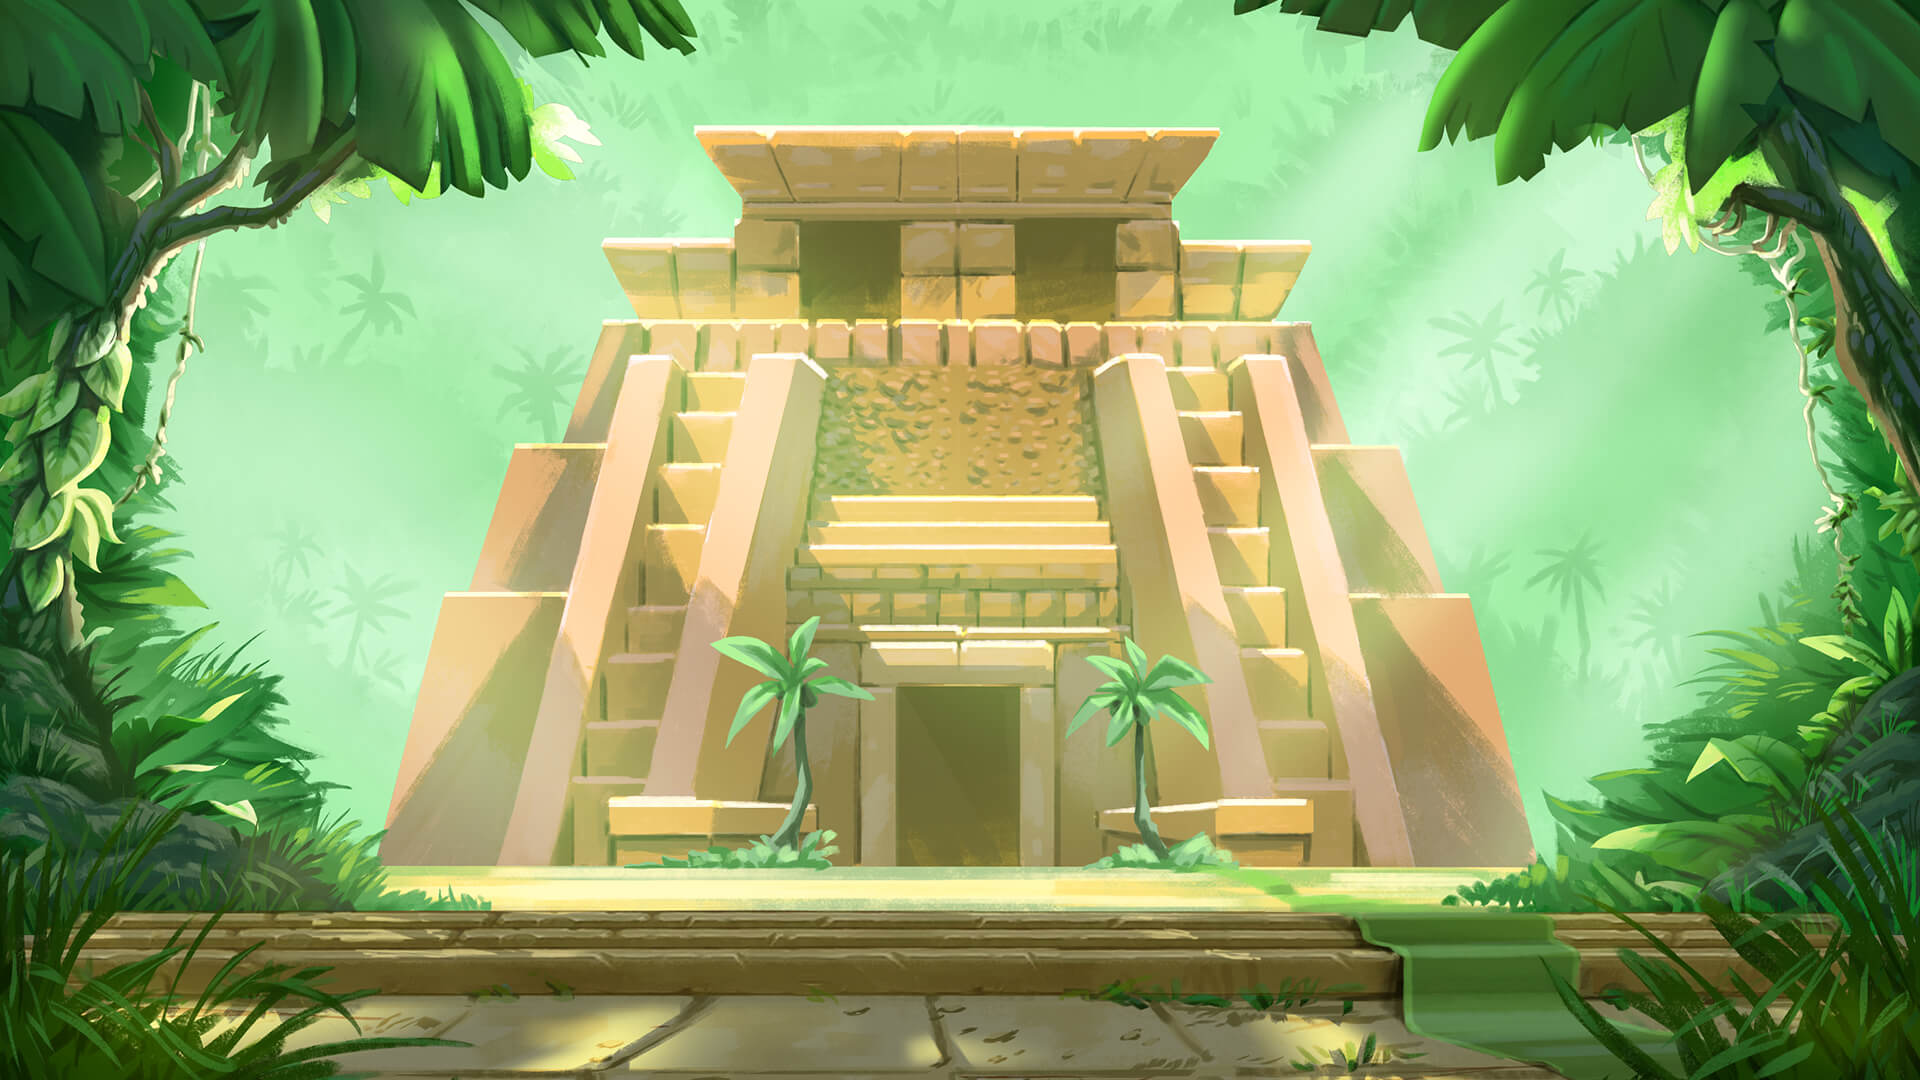 Game hight resolution background Mayana